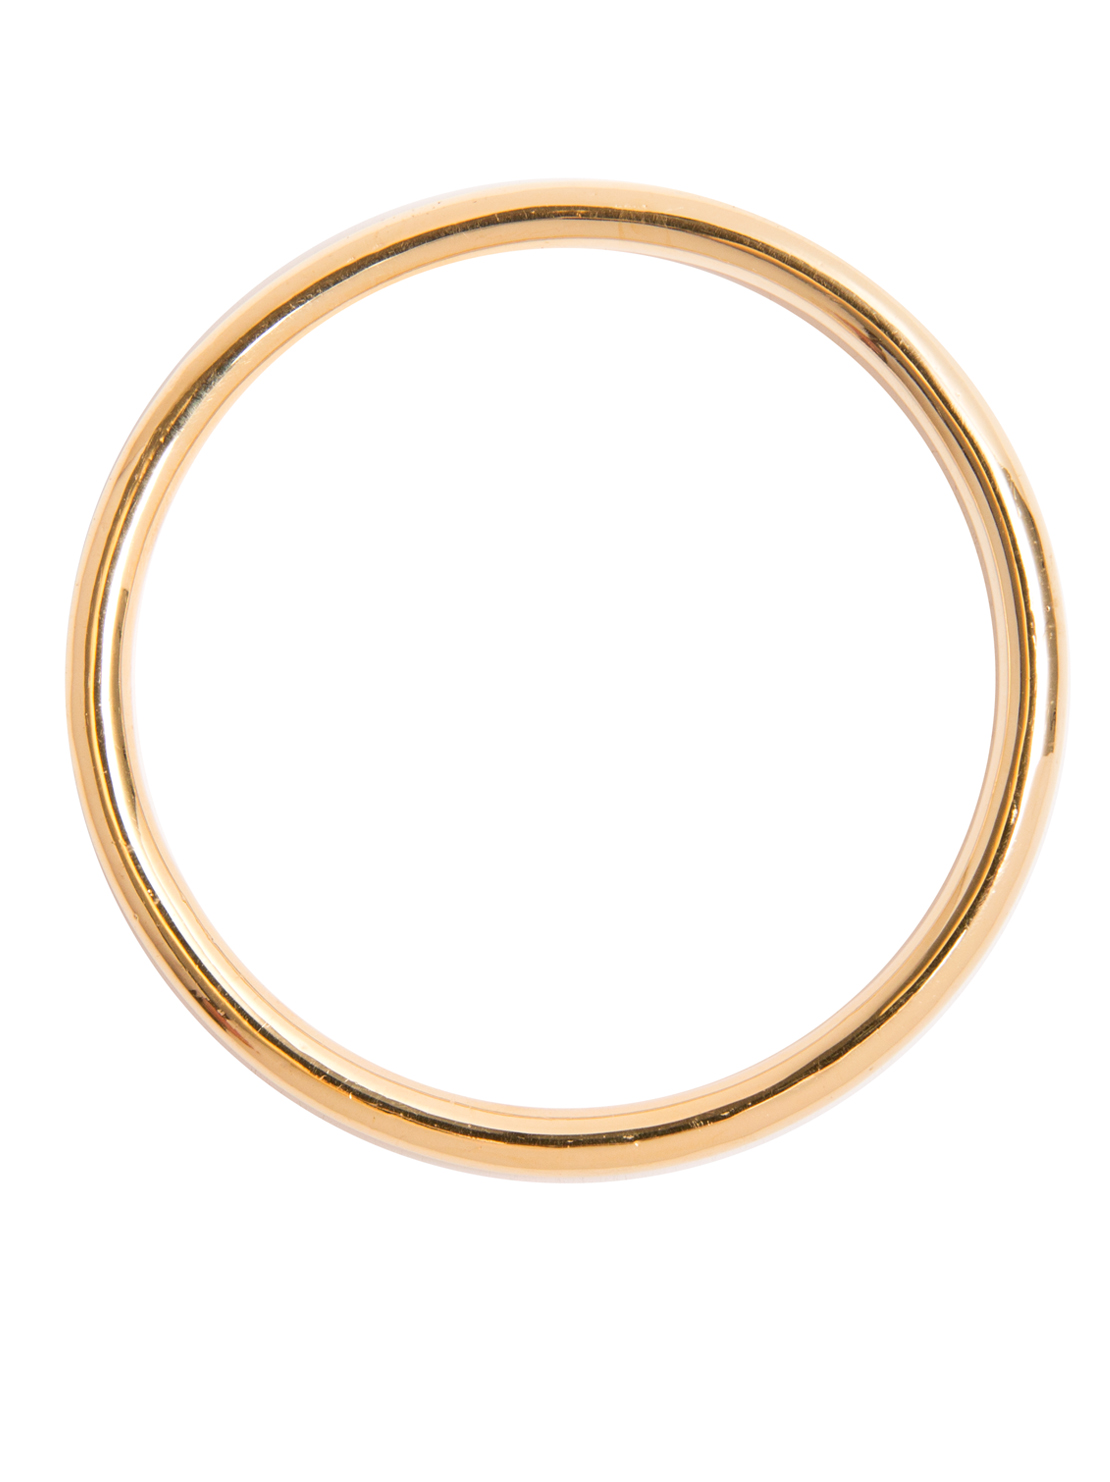 Medium Plain Gold Bangle - Tilly Sveaas Jewellery